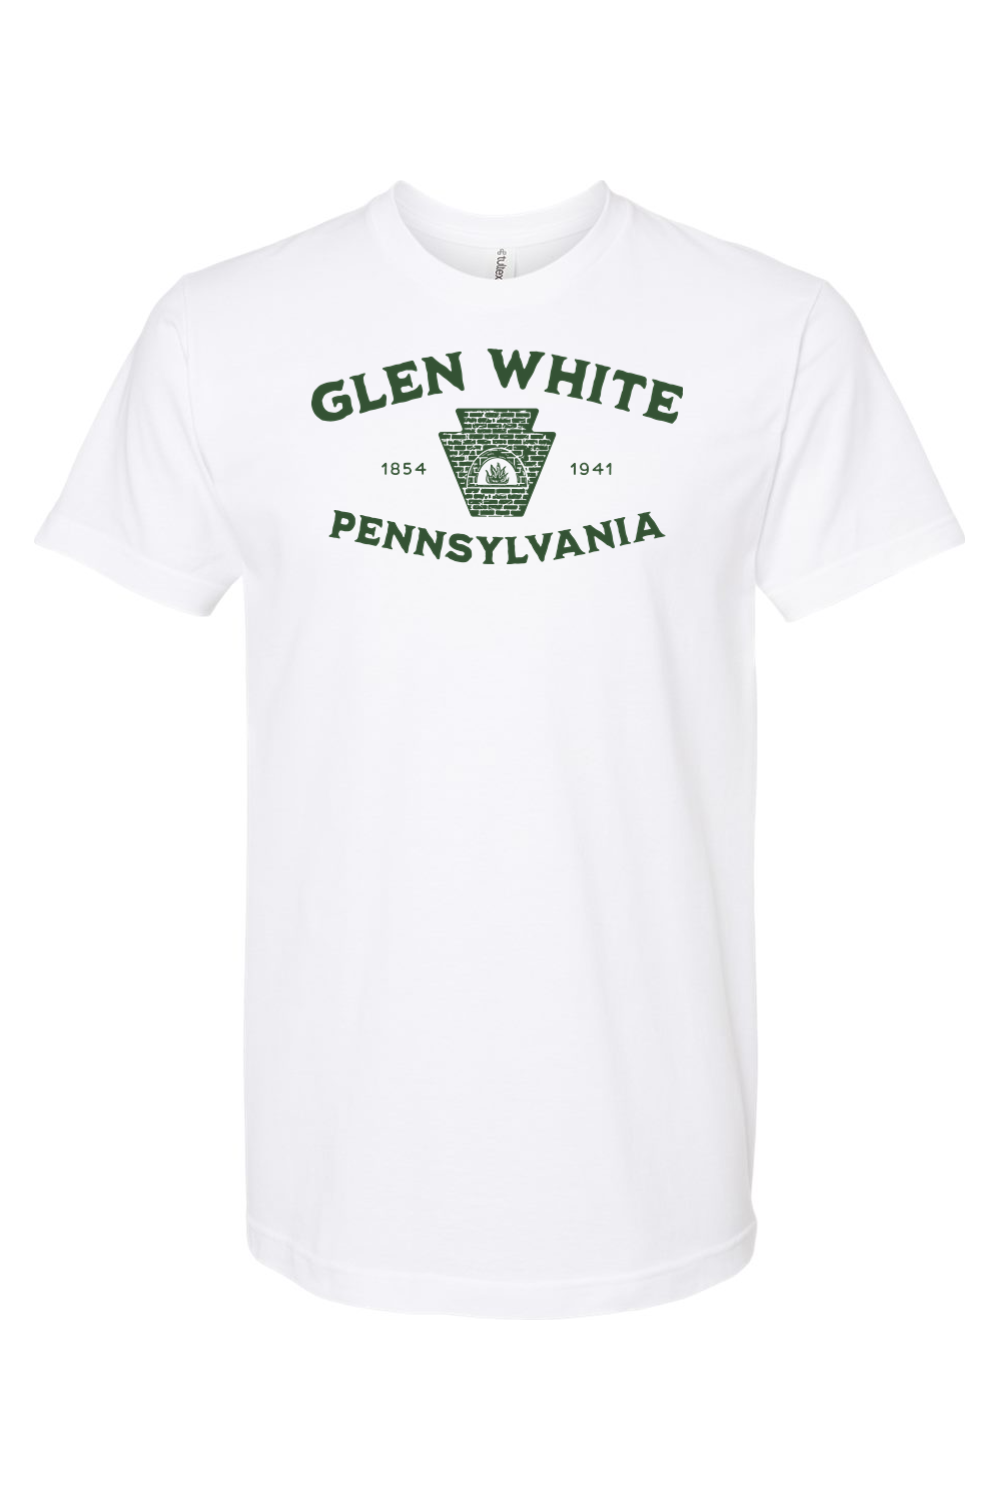 Glen White Pennsylvania - Yinzylvania